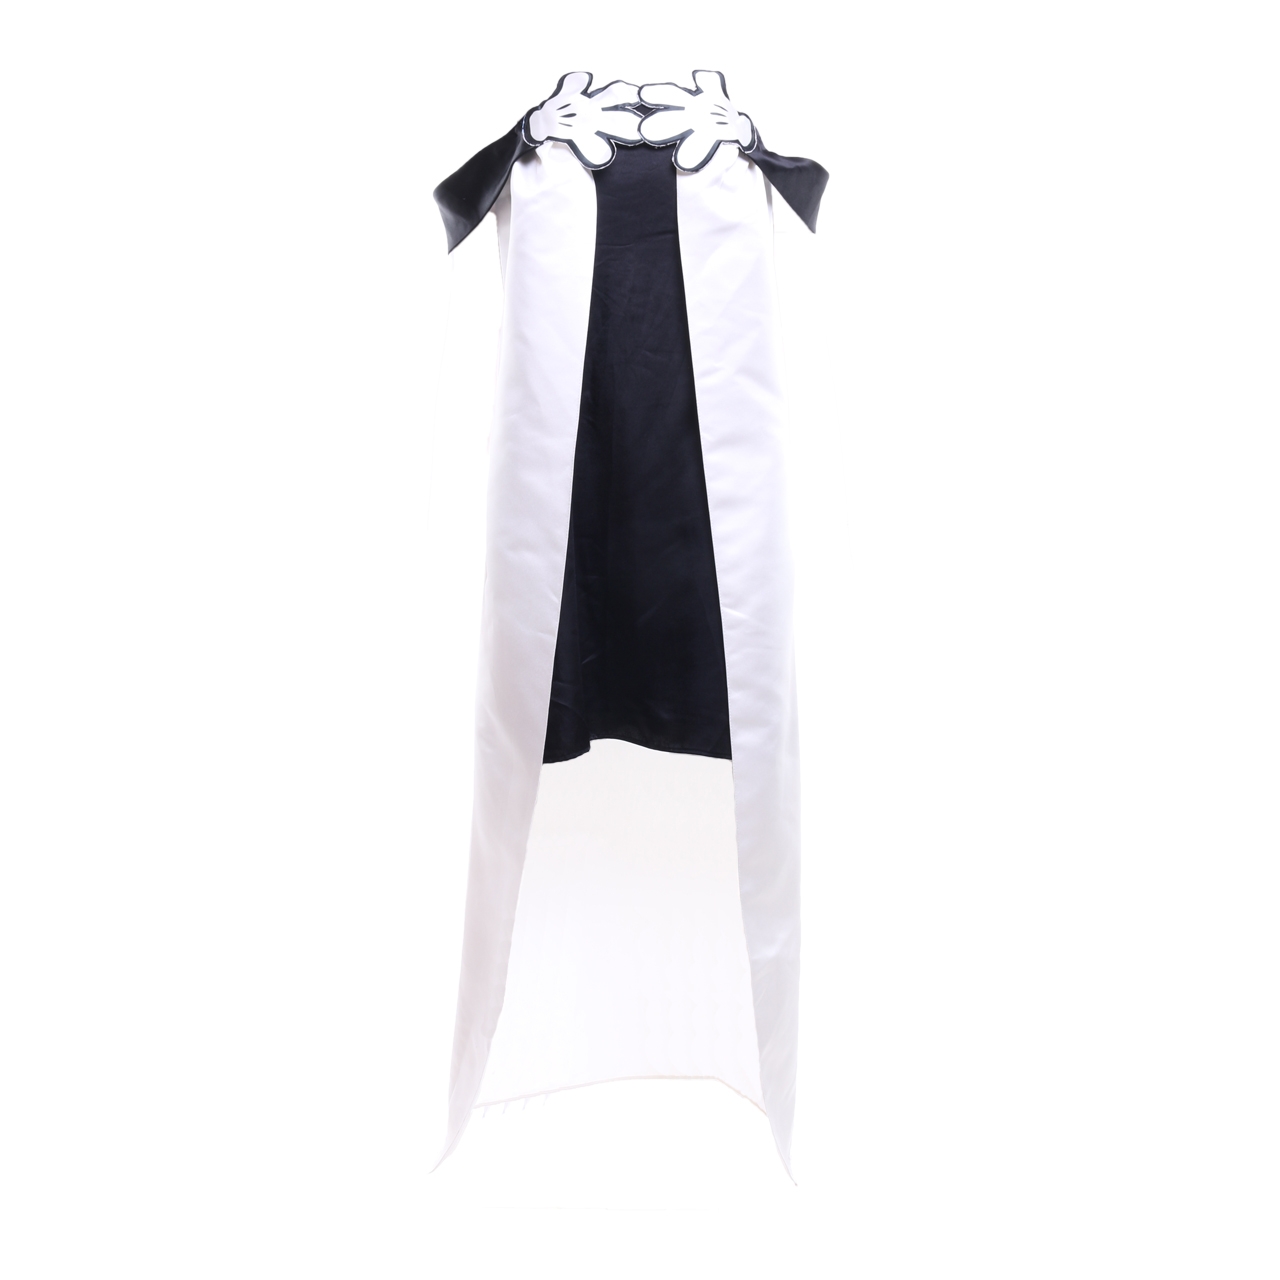 Stylica White And Black Mini Dress